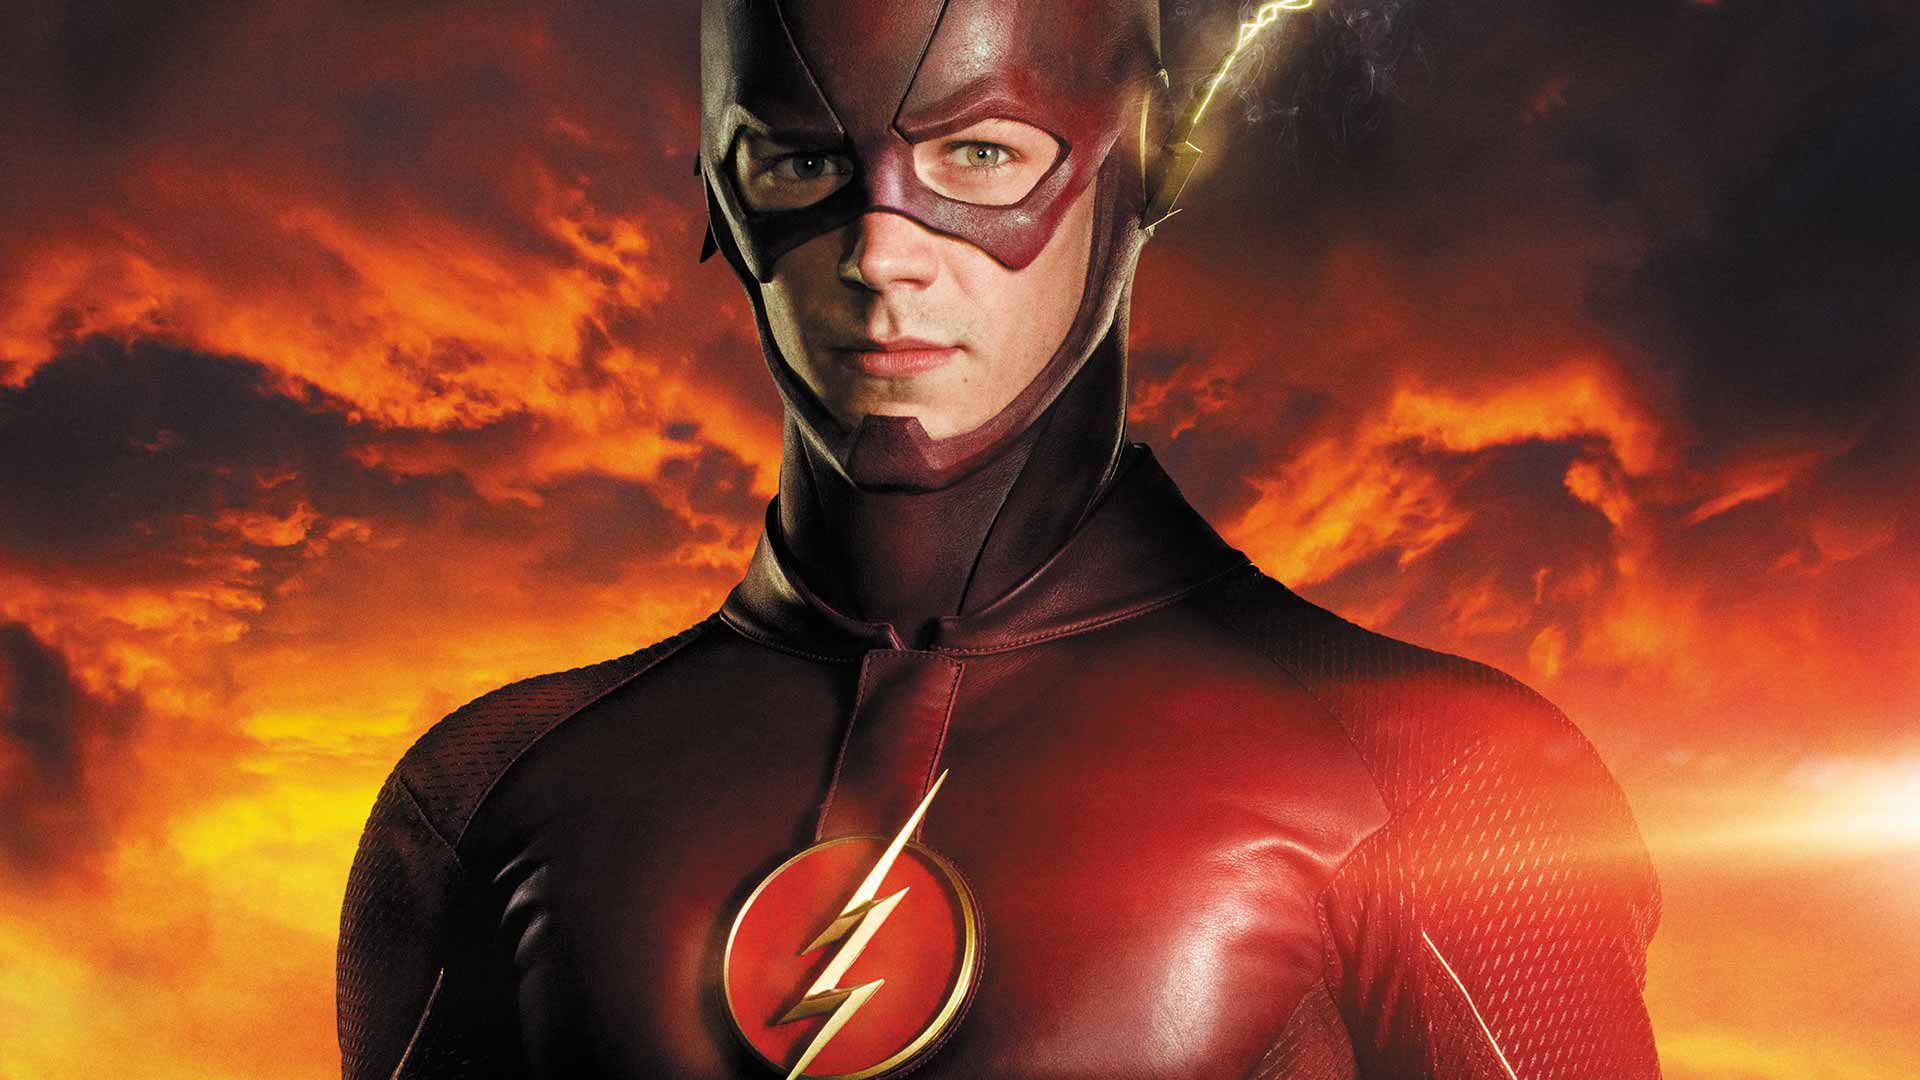 The Flash Season 4 Wallpaper Hd - Flash Suit Red Emblem - HD Wallpaper 